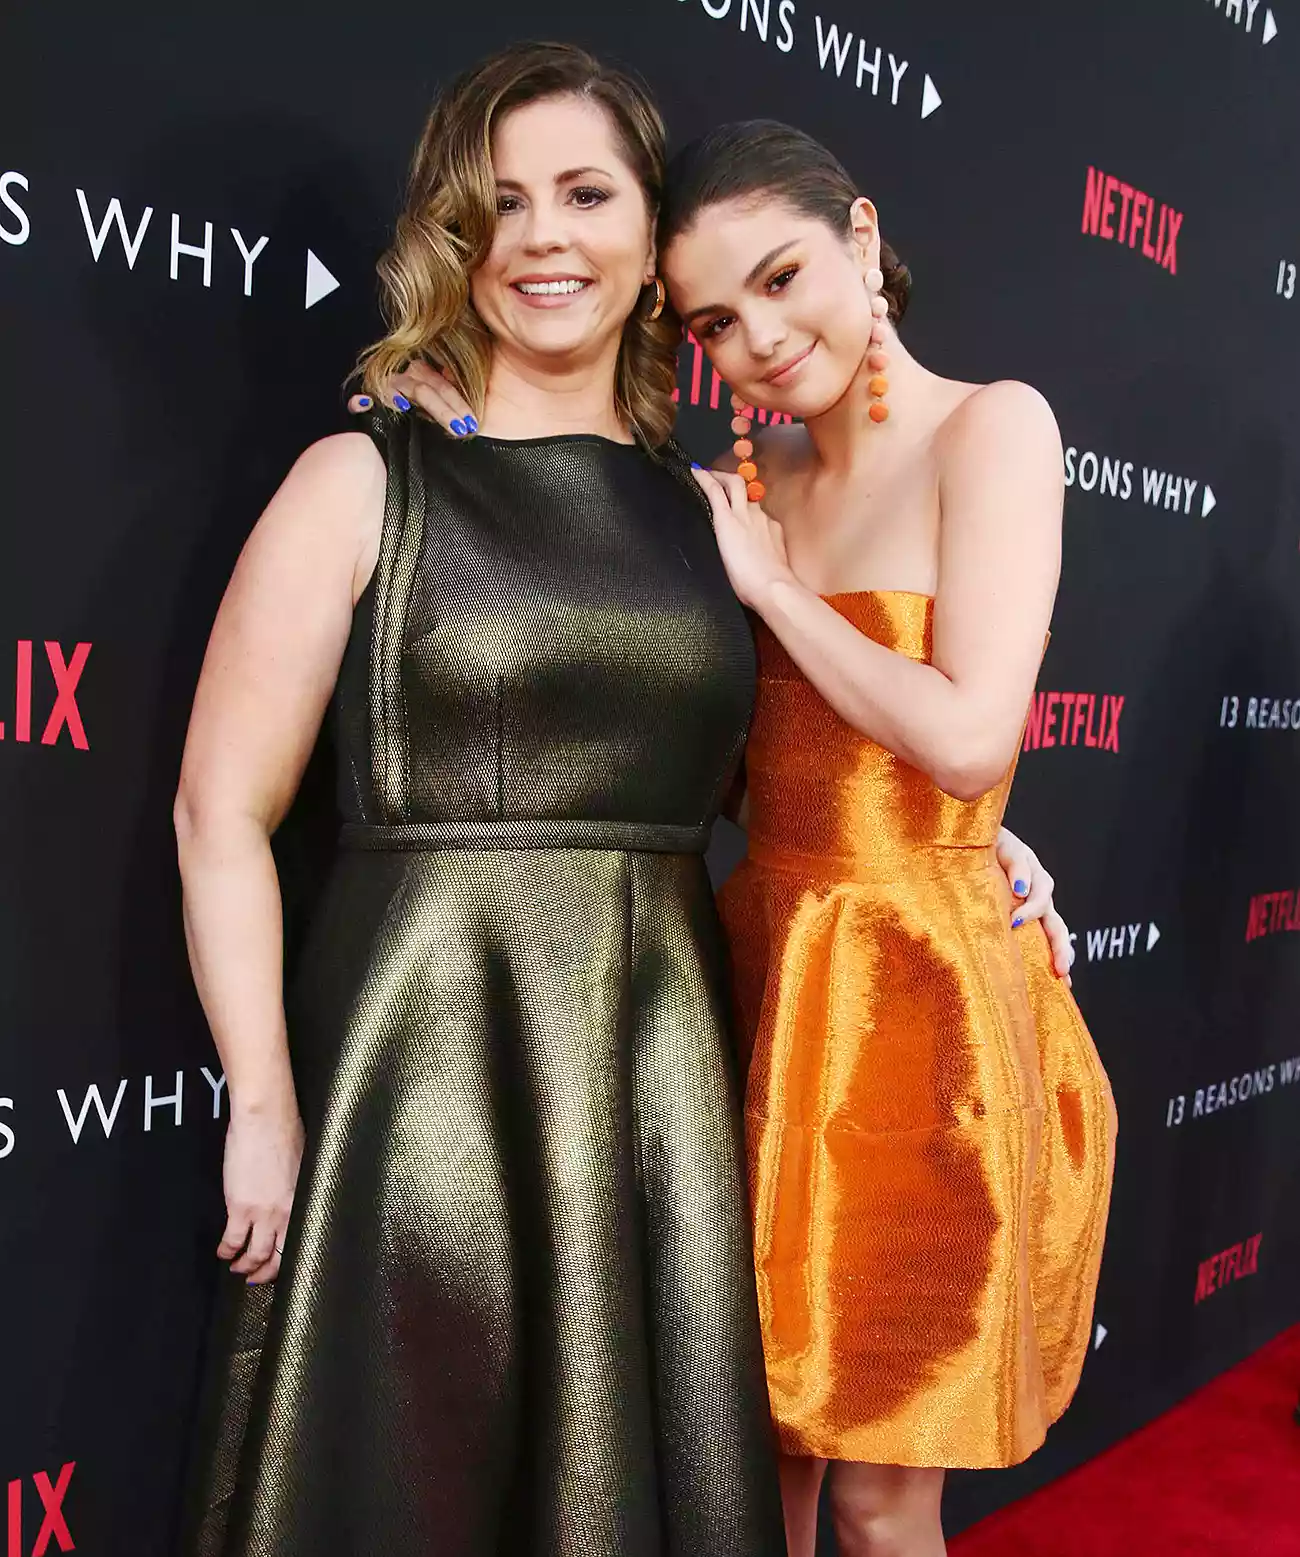 Mandy Teefey and Exec. Producer Selena Gomez seen at Netflix '13 Reasons Why' Premiere at Paramount Studios, in Los Angeles, CA Netflix '13 Reasons Why' Premiere, Los Angeles, USA - 30 Mar 2017